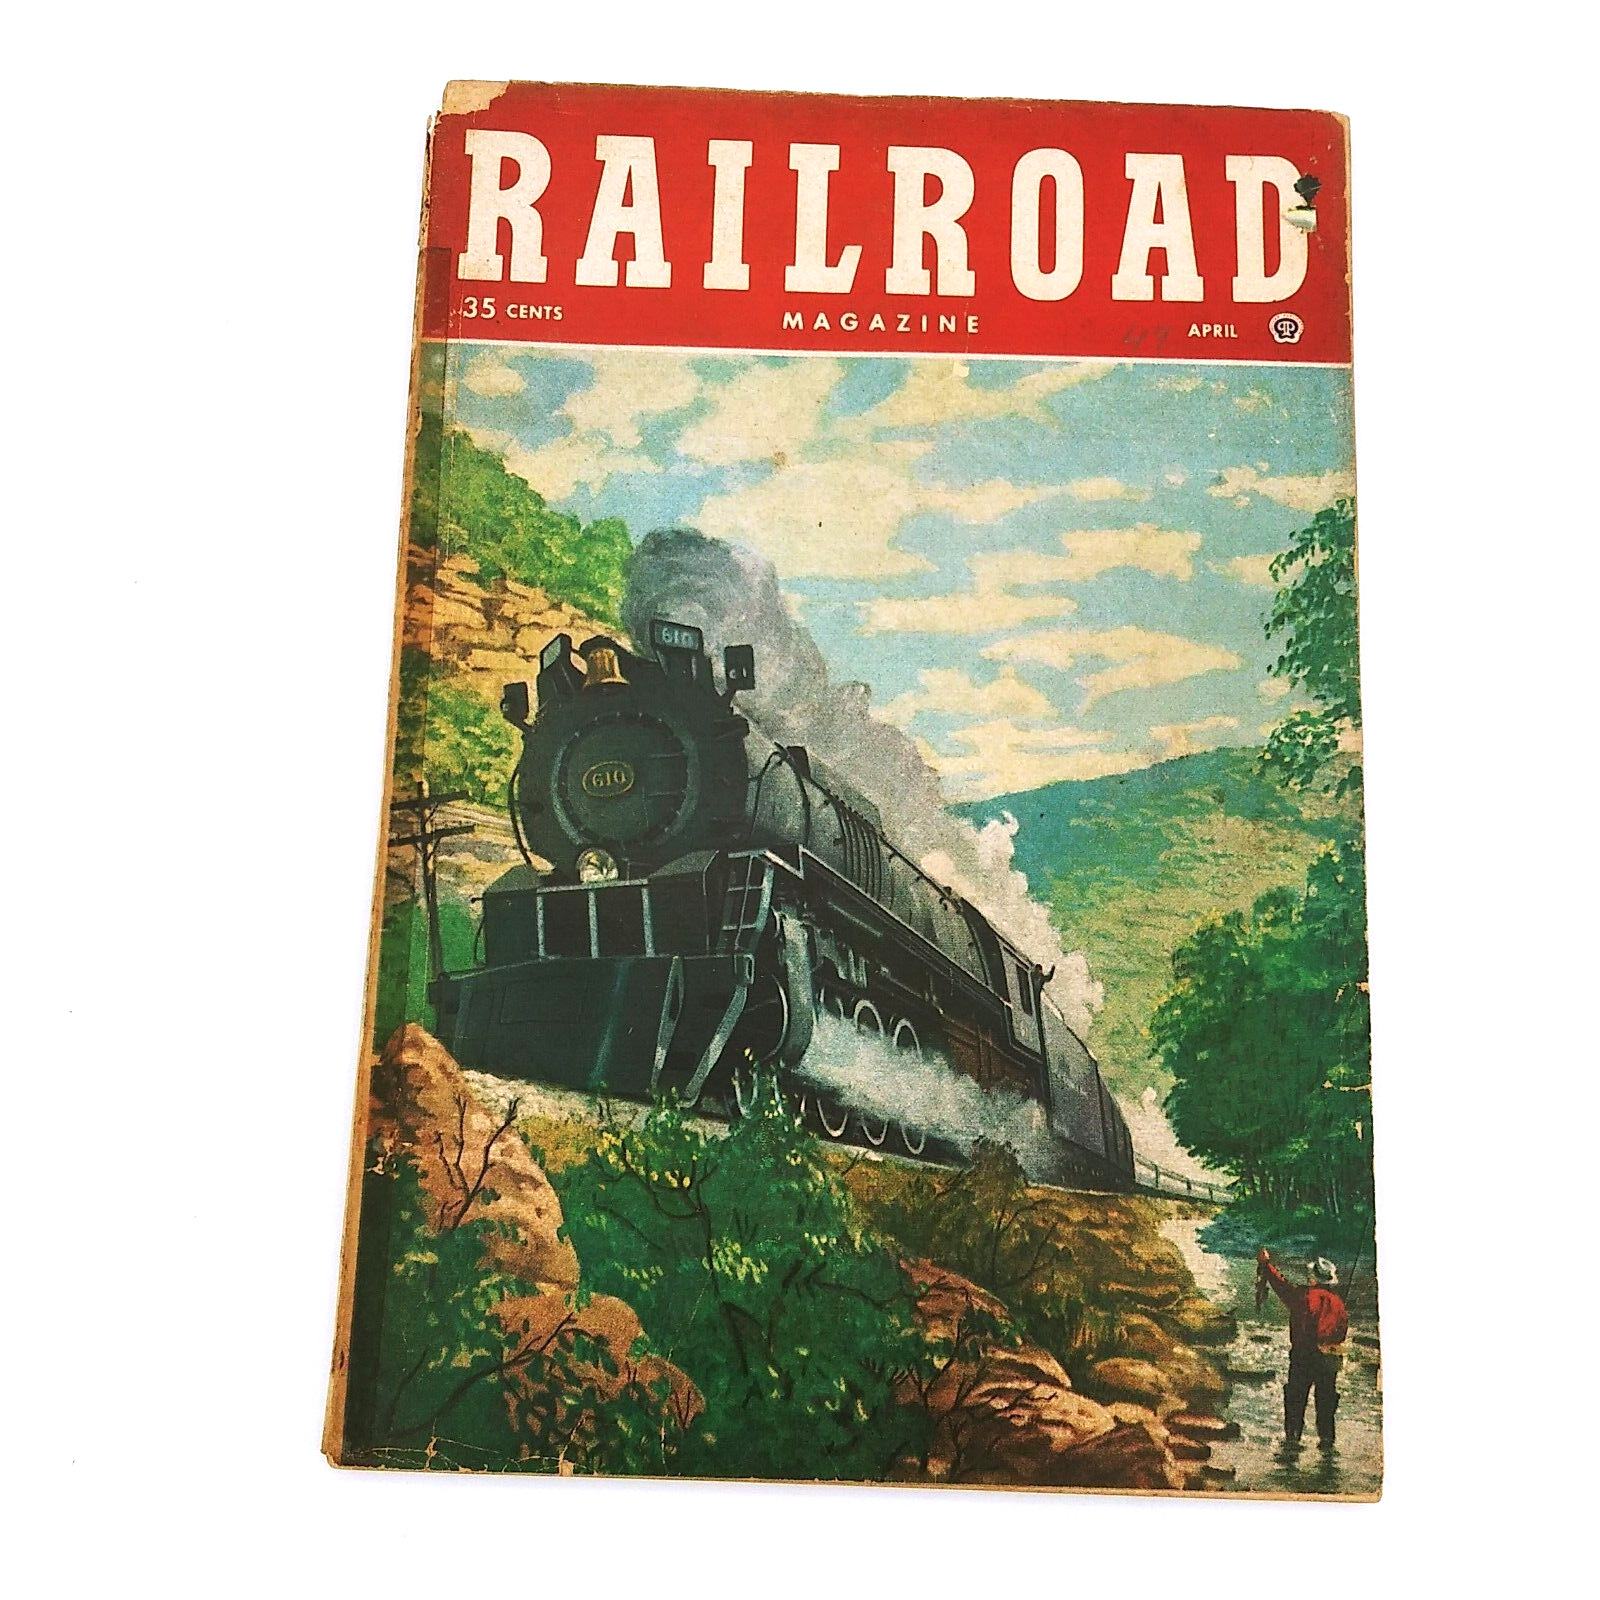 Vintage Railroad Magazine April 1949 Issue Vol 48 No 3 Goshan Gap Va (b) - READ